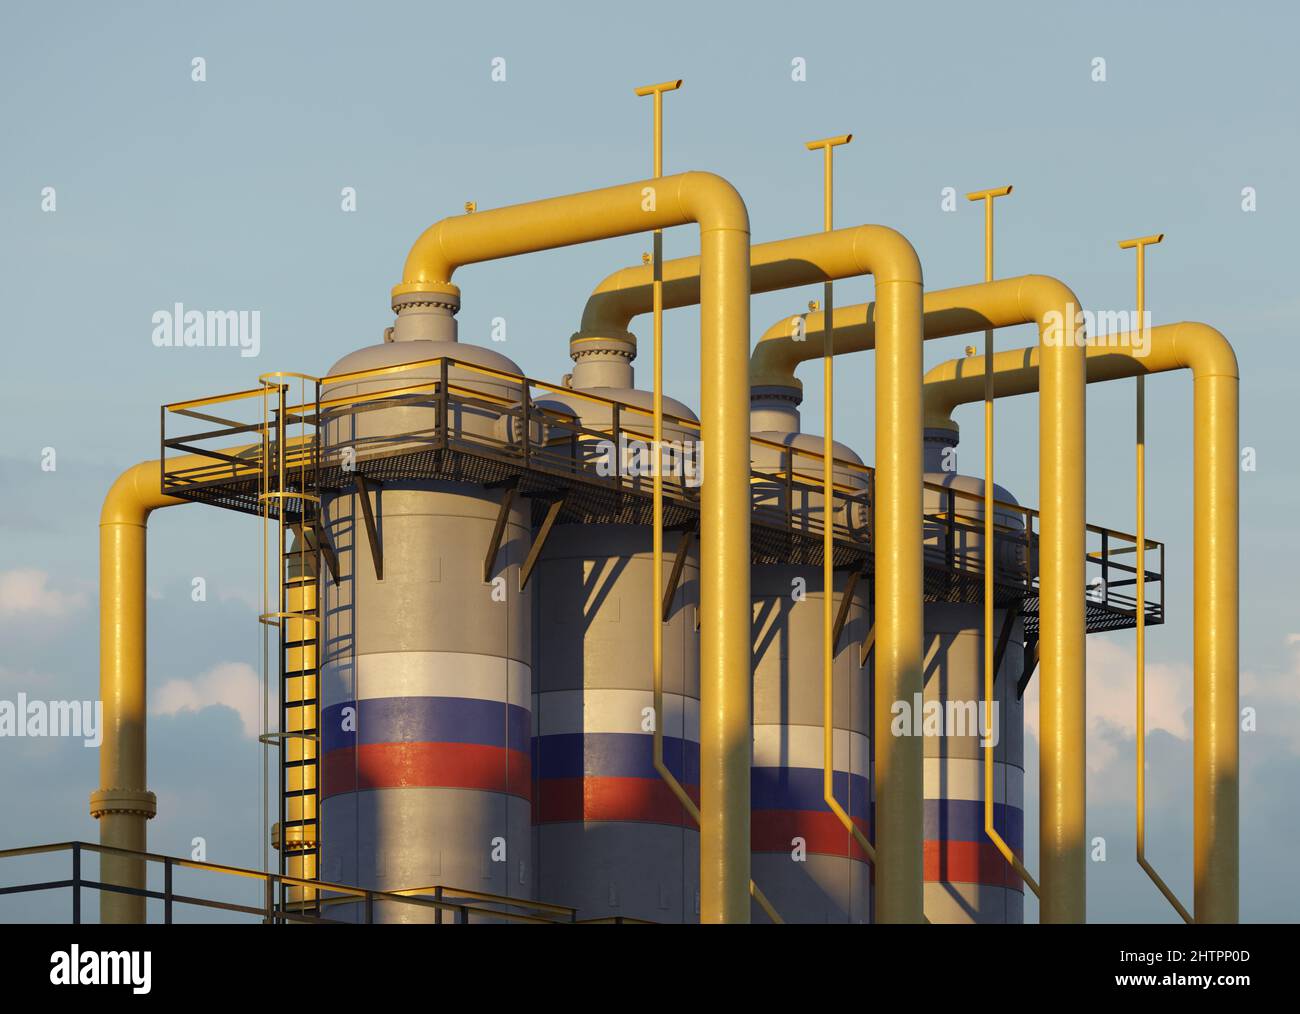 Medium Gas Tank Industrial Version Stock Photo - Download Image